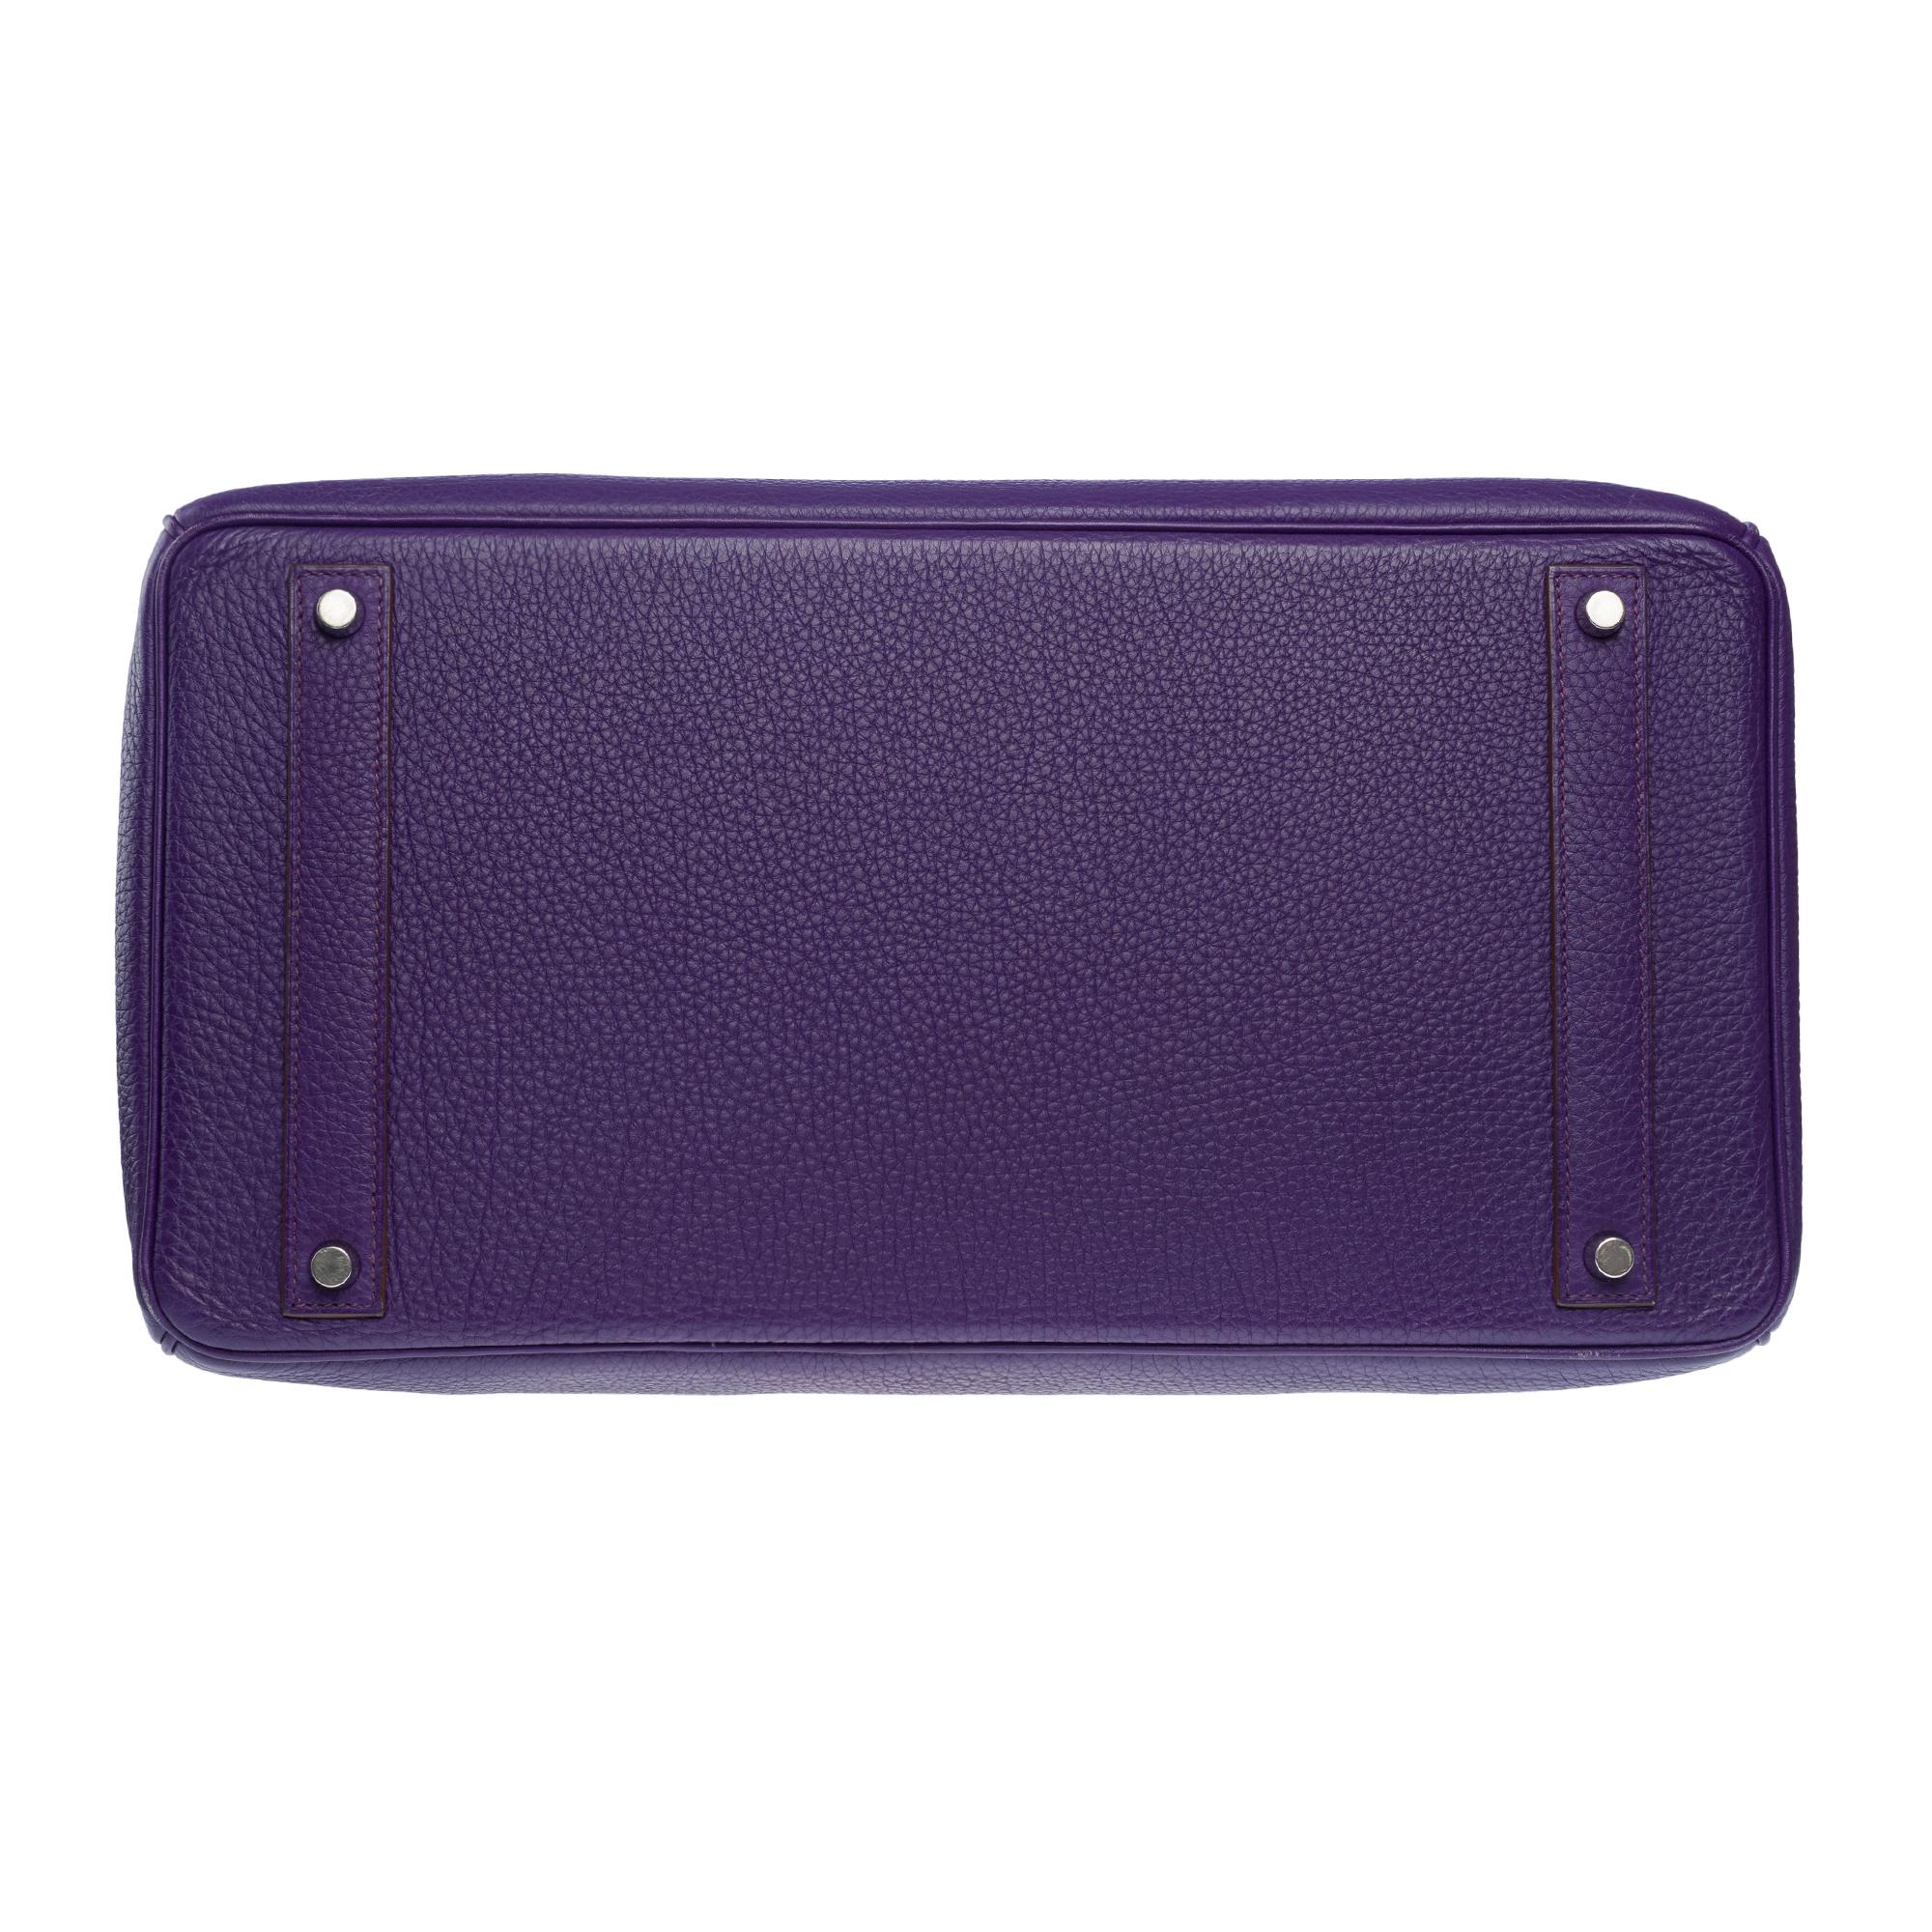 Classy & Rare Hermes Birkin 40 handbag in Iris Purple Togo leather, SHW 6